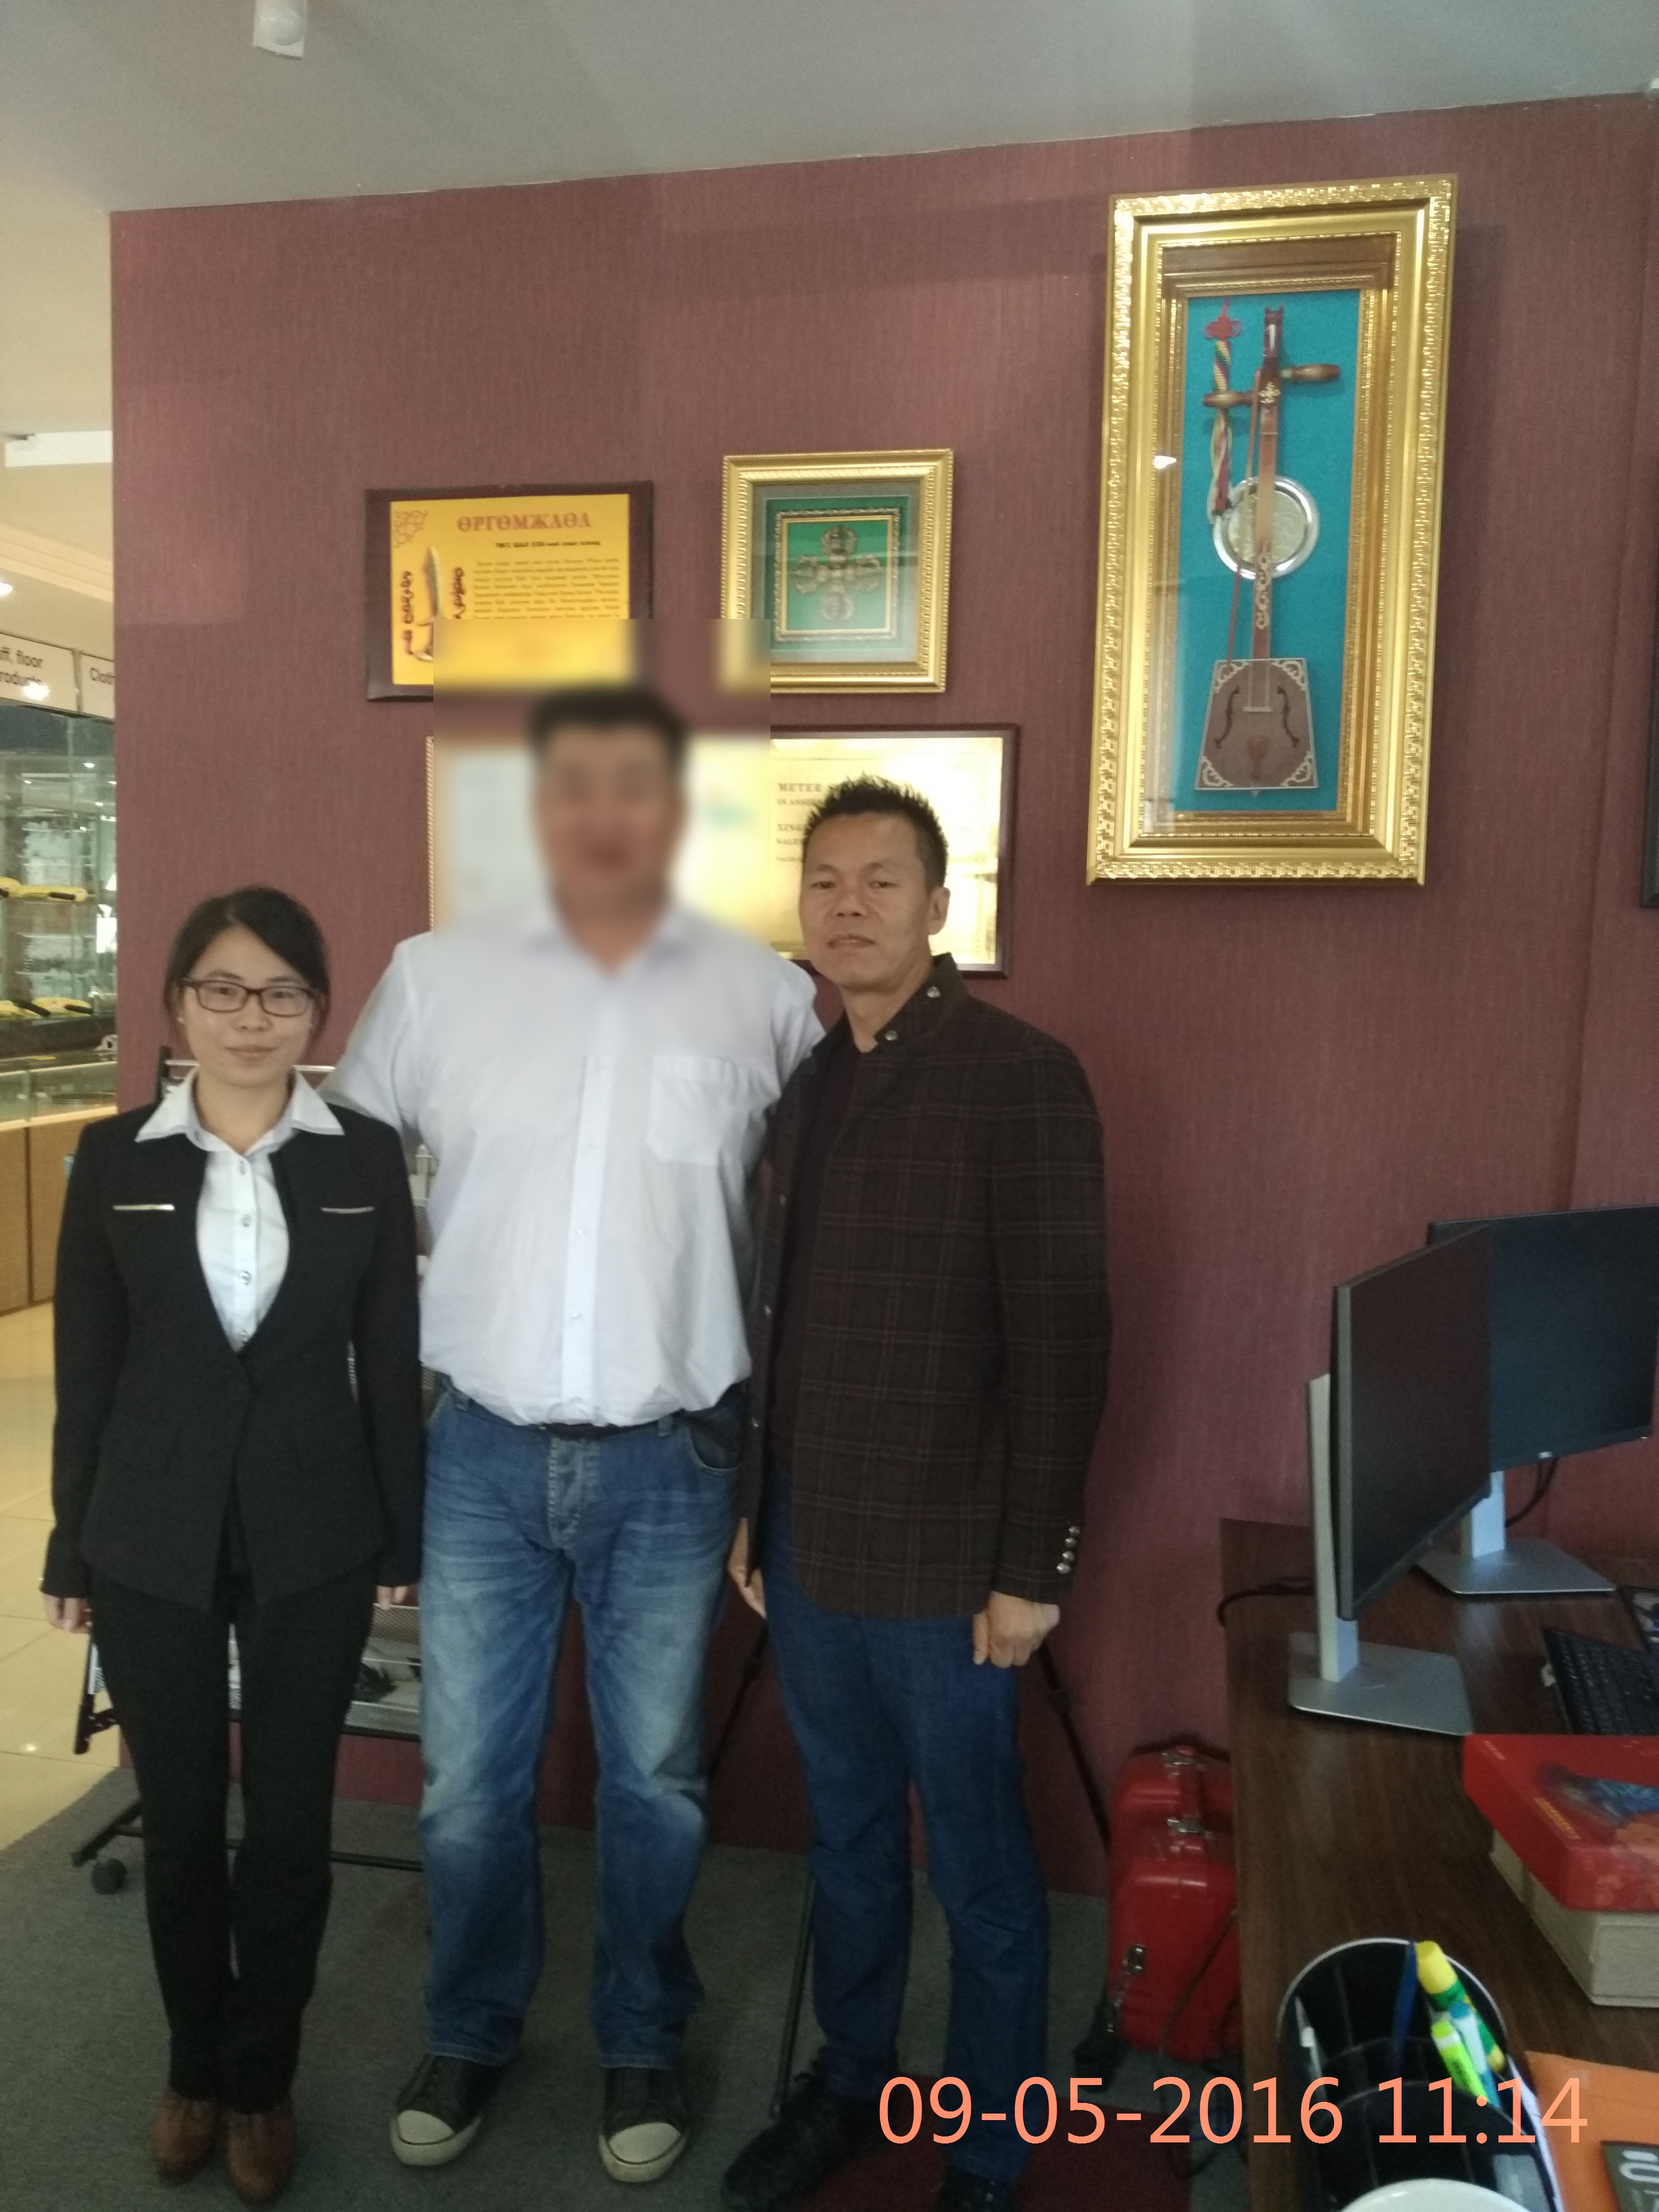 Xaingyi equipo Mongolia exterior visita